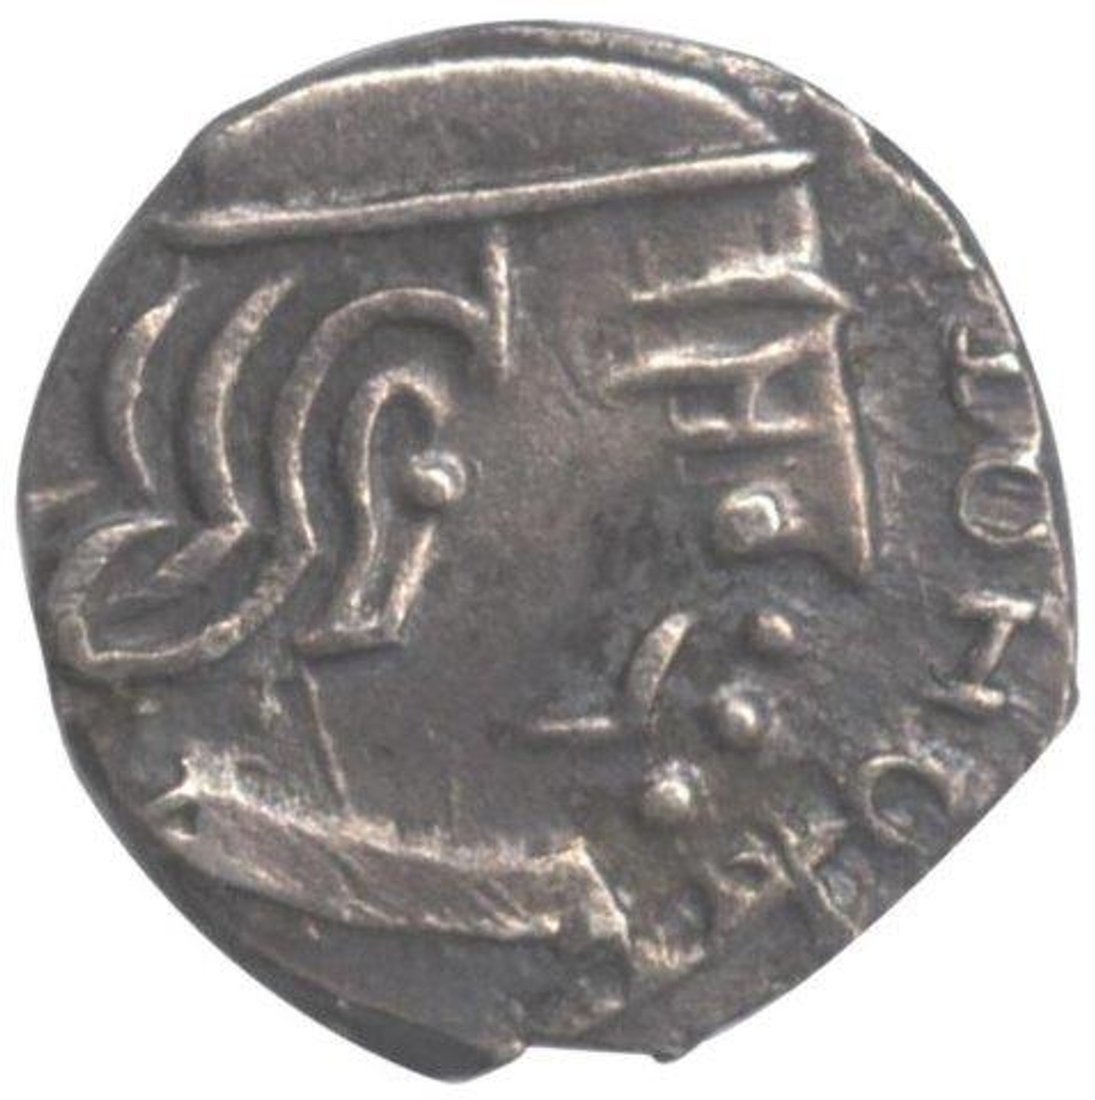 Silver Drachma Coin of Kumaragupta I  of Gupta Dynasty.